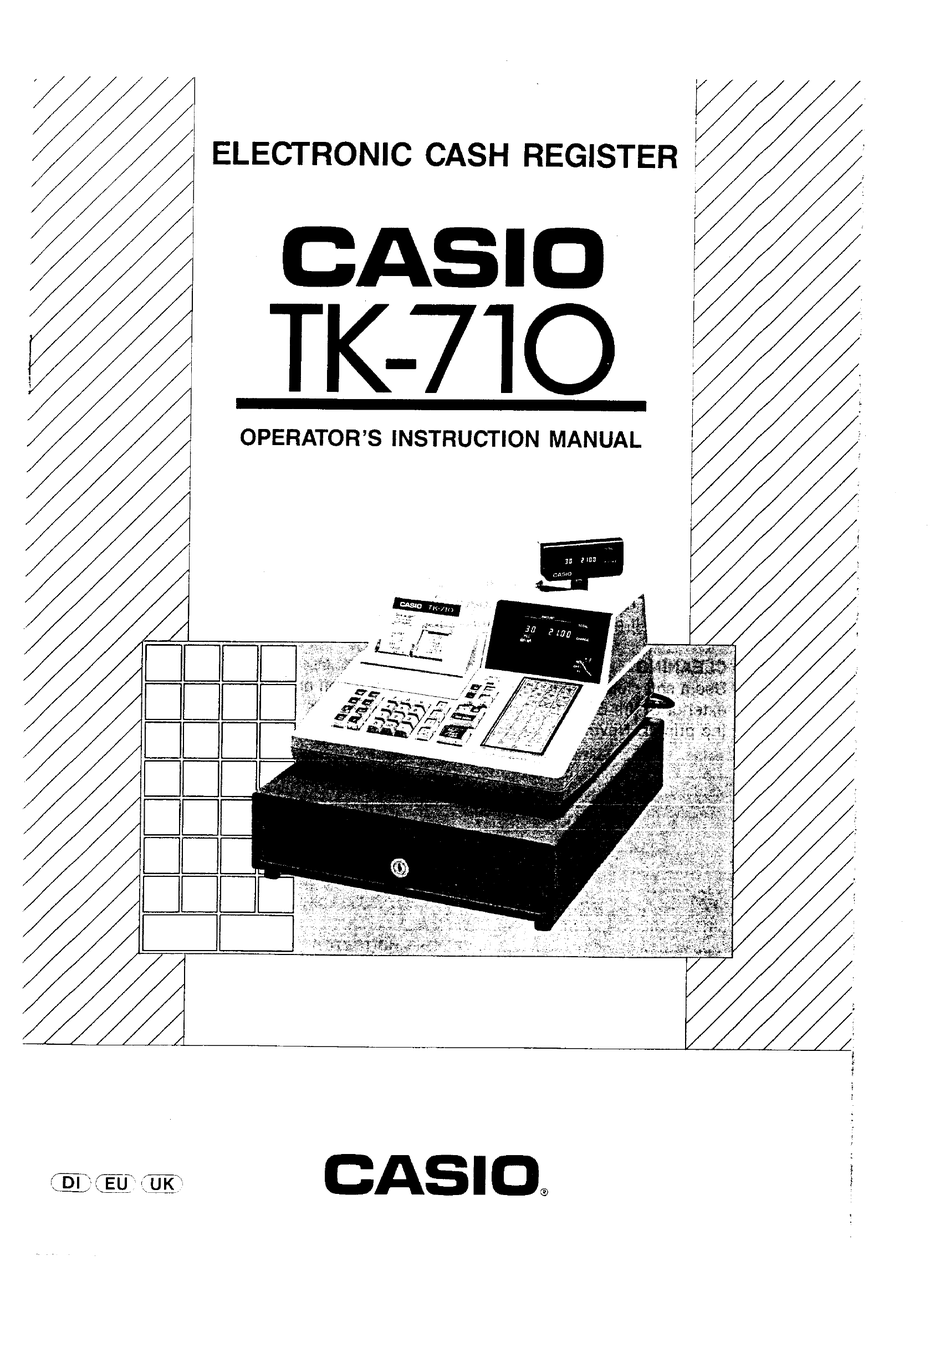 CASIO TK710 OPERATOR'S INSTRUCTION MANUAL Pdf Download ManualsLib